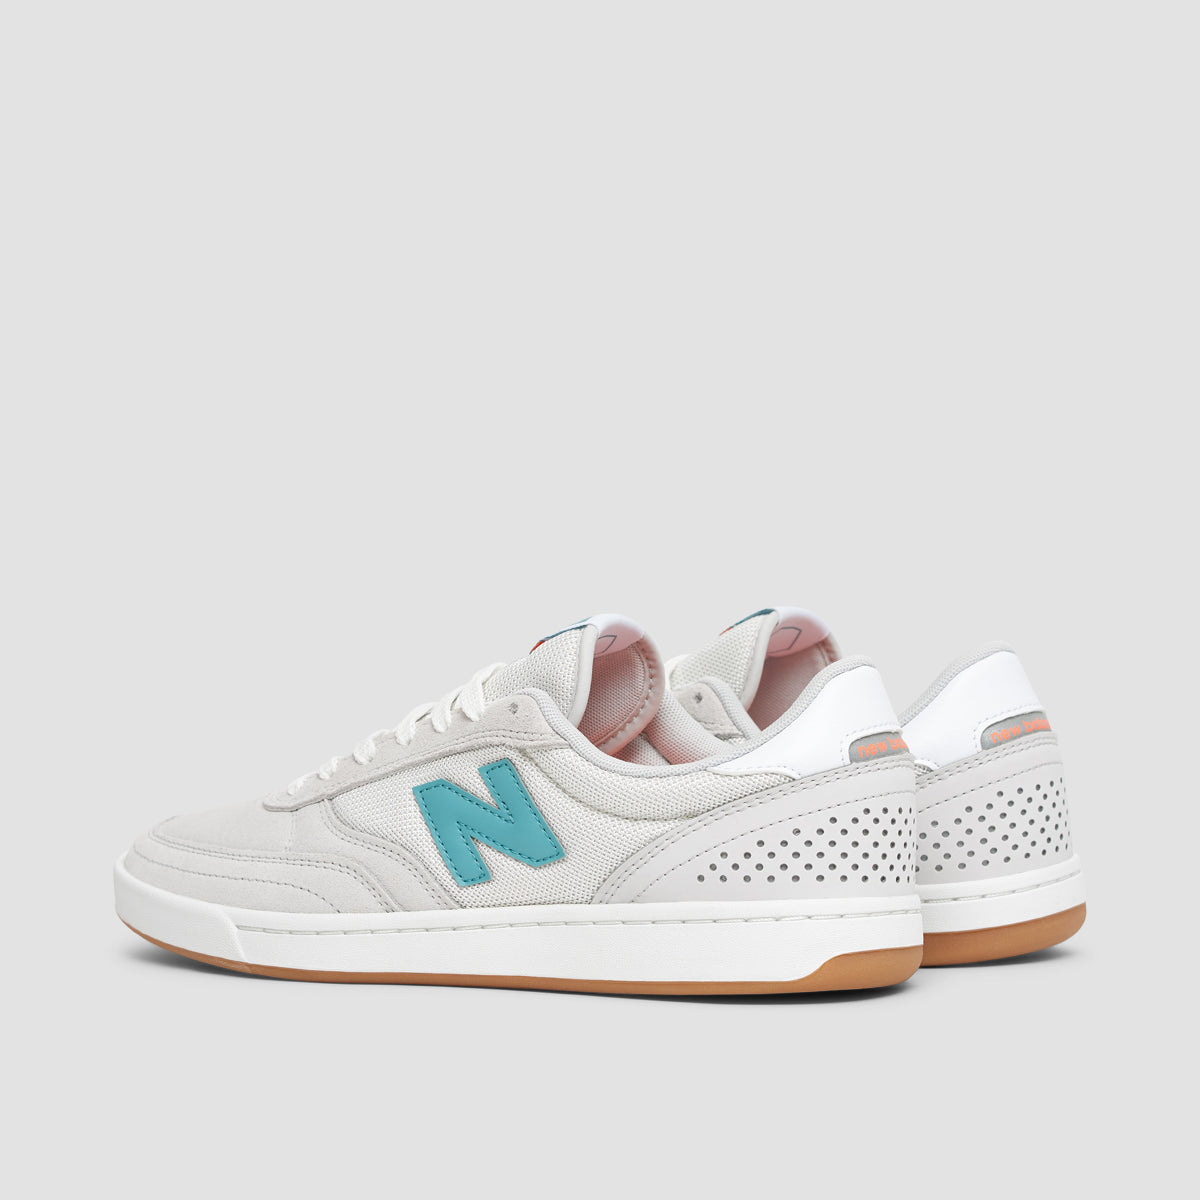 New Balance Numeric 440 Shoes - Light Grey/Aqua Sea